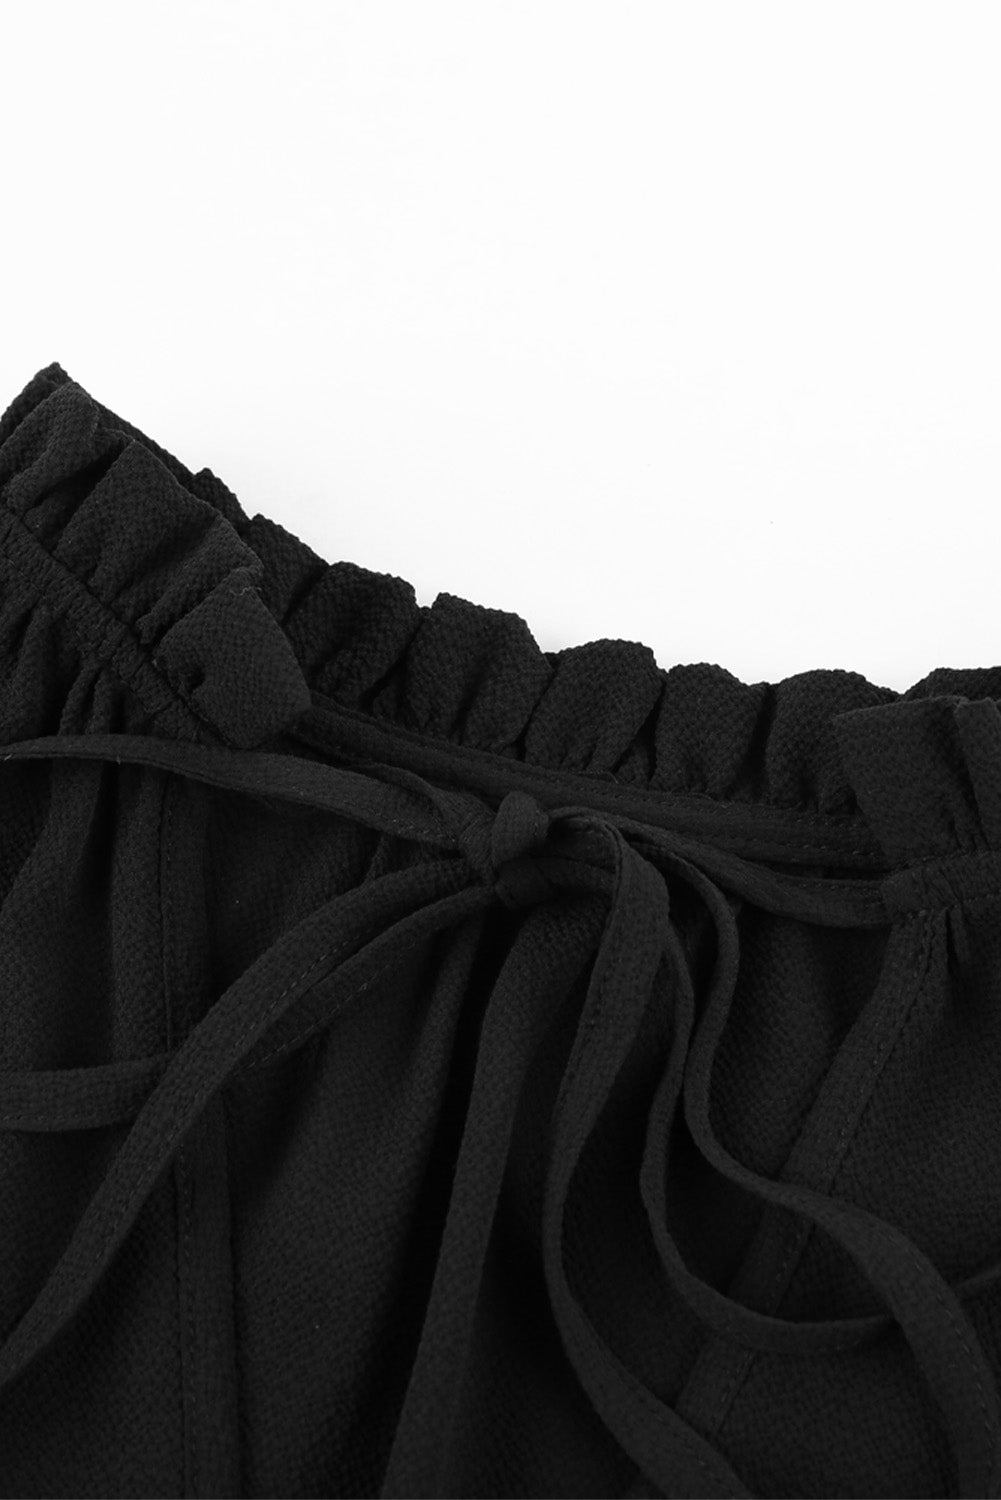 Black V Neck Long Sleeve Ruffle Tiered Mini Dress